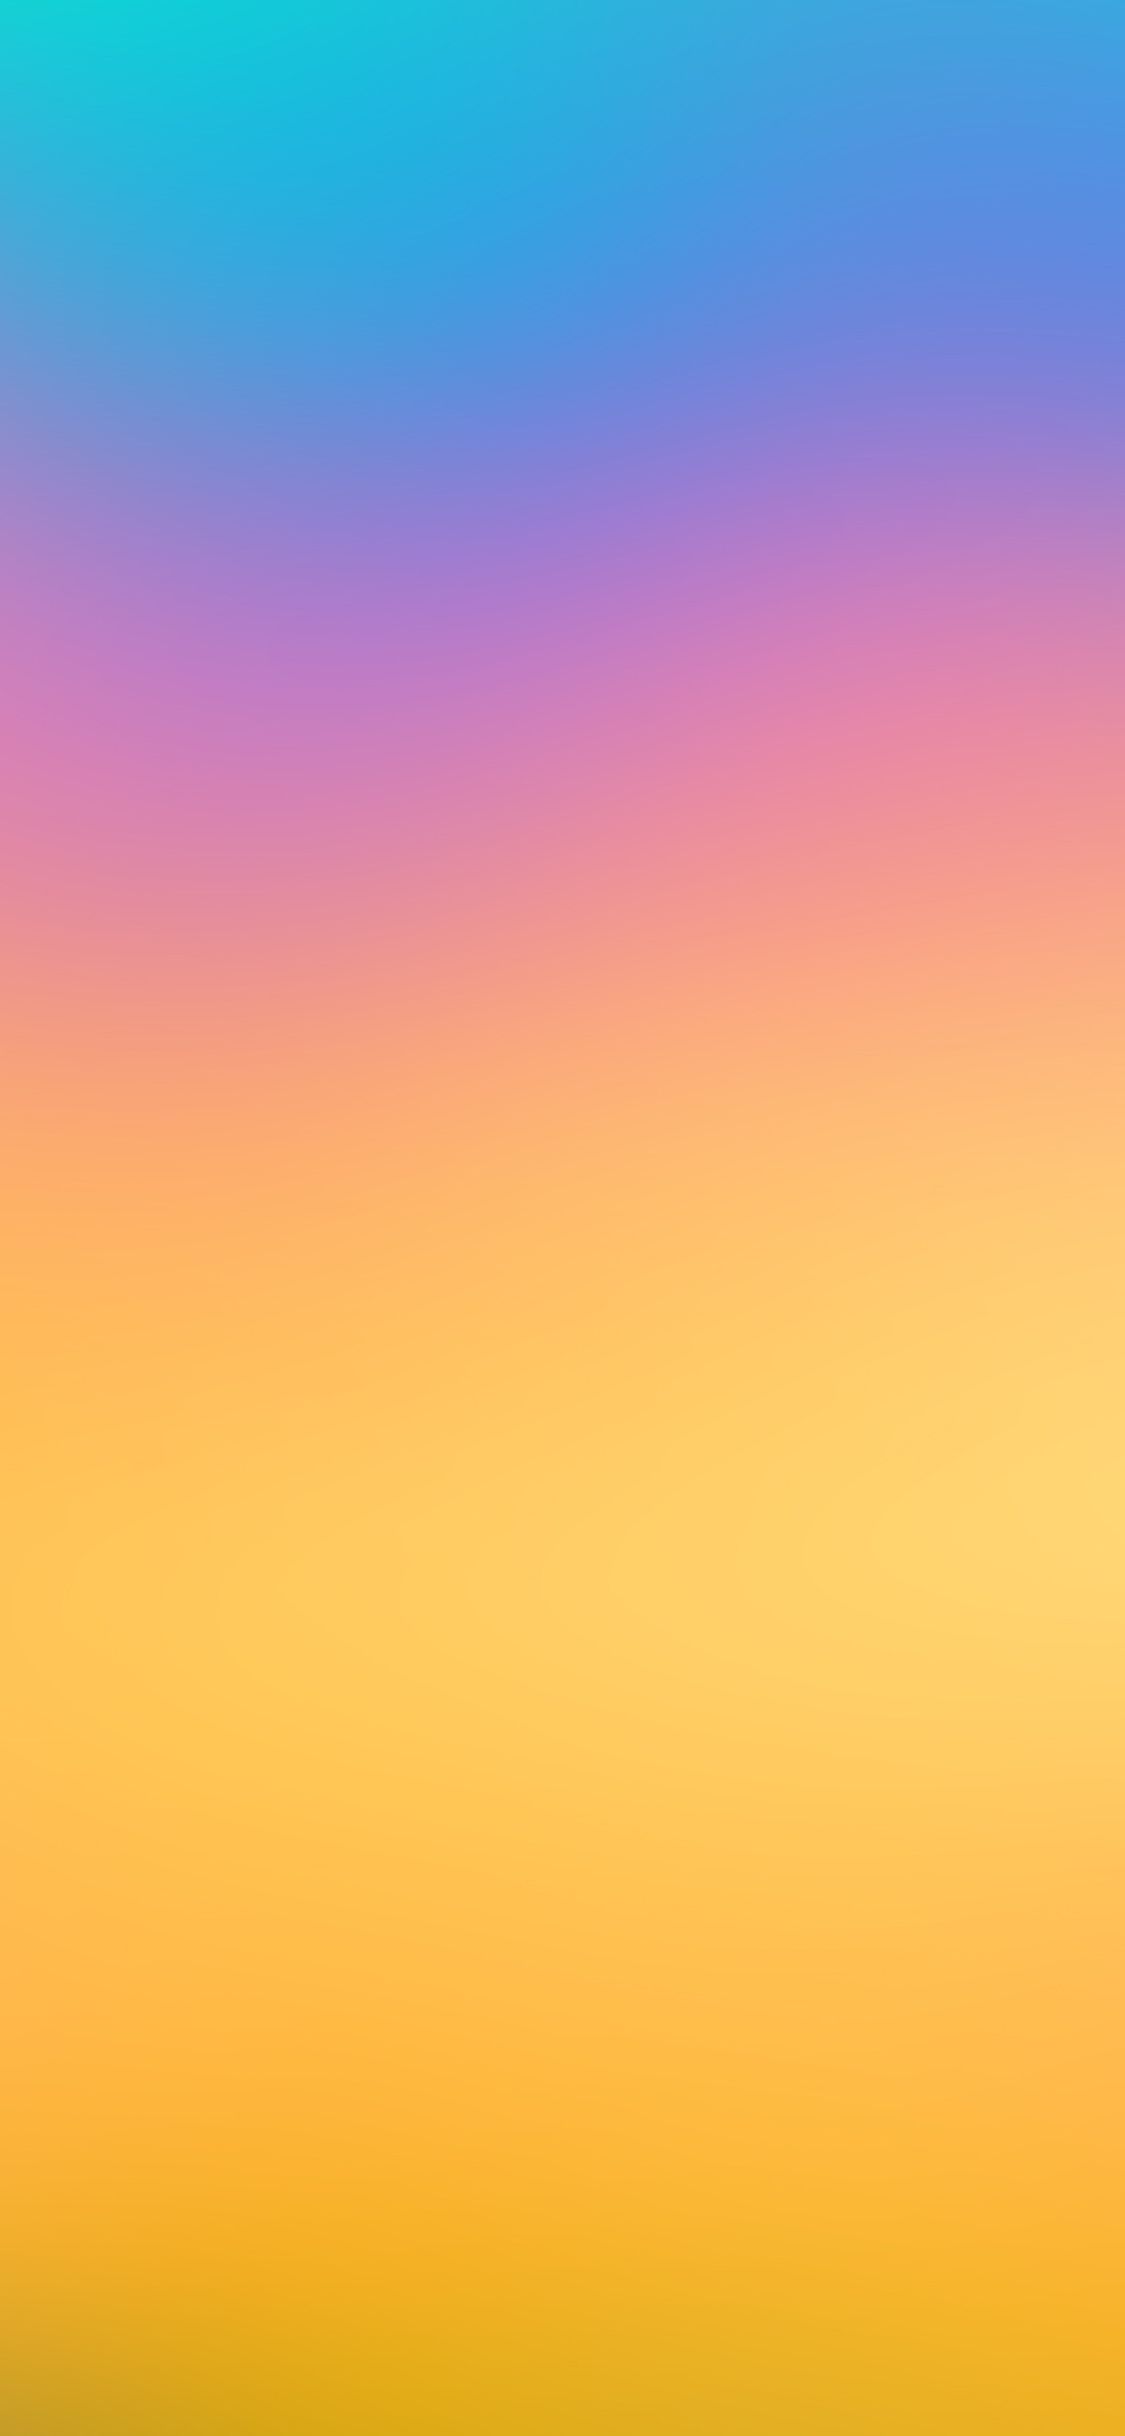 iPhone X wallpaper. bright yellow blue sunny blur gradation